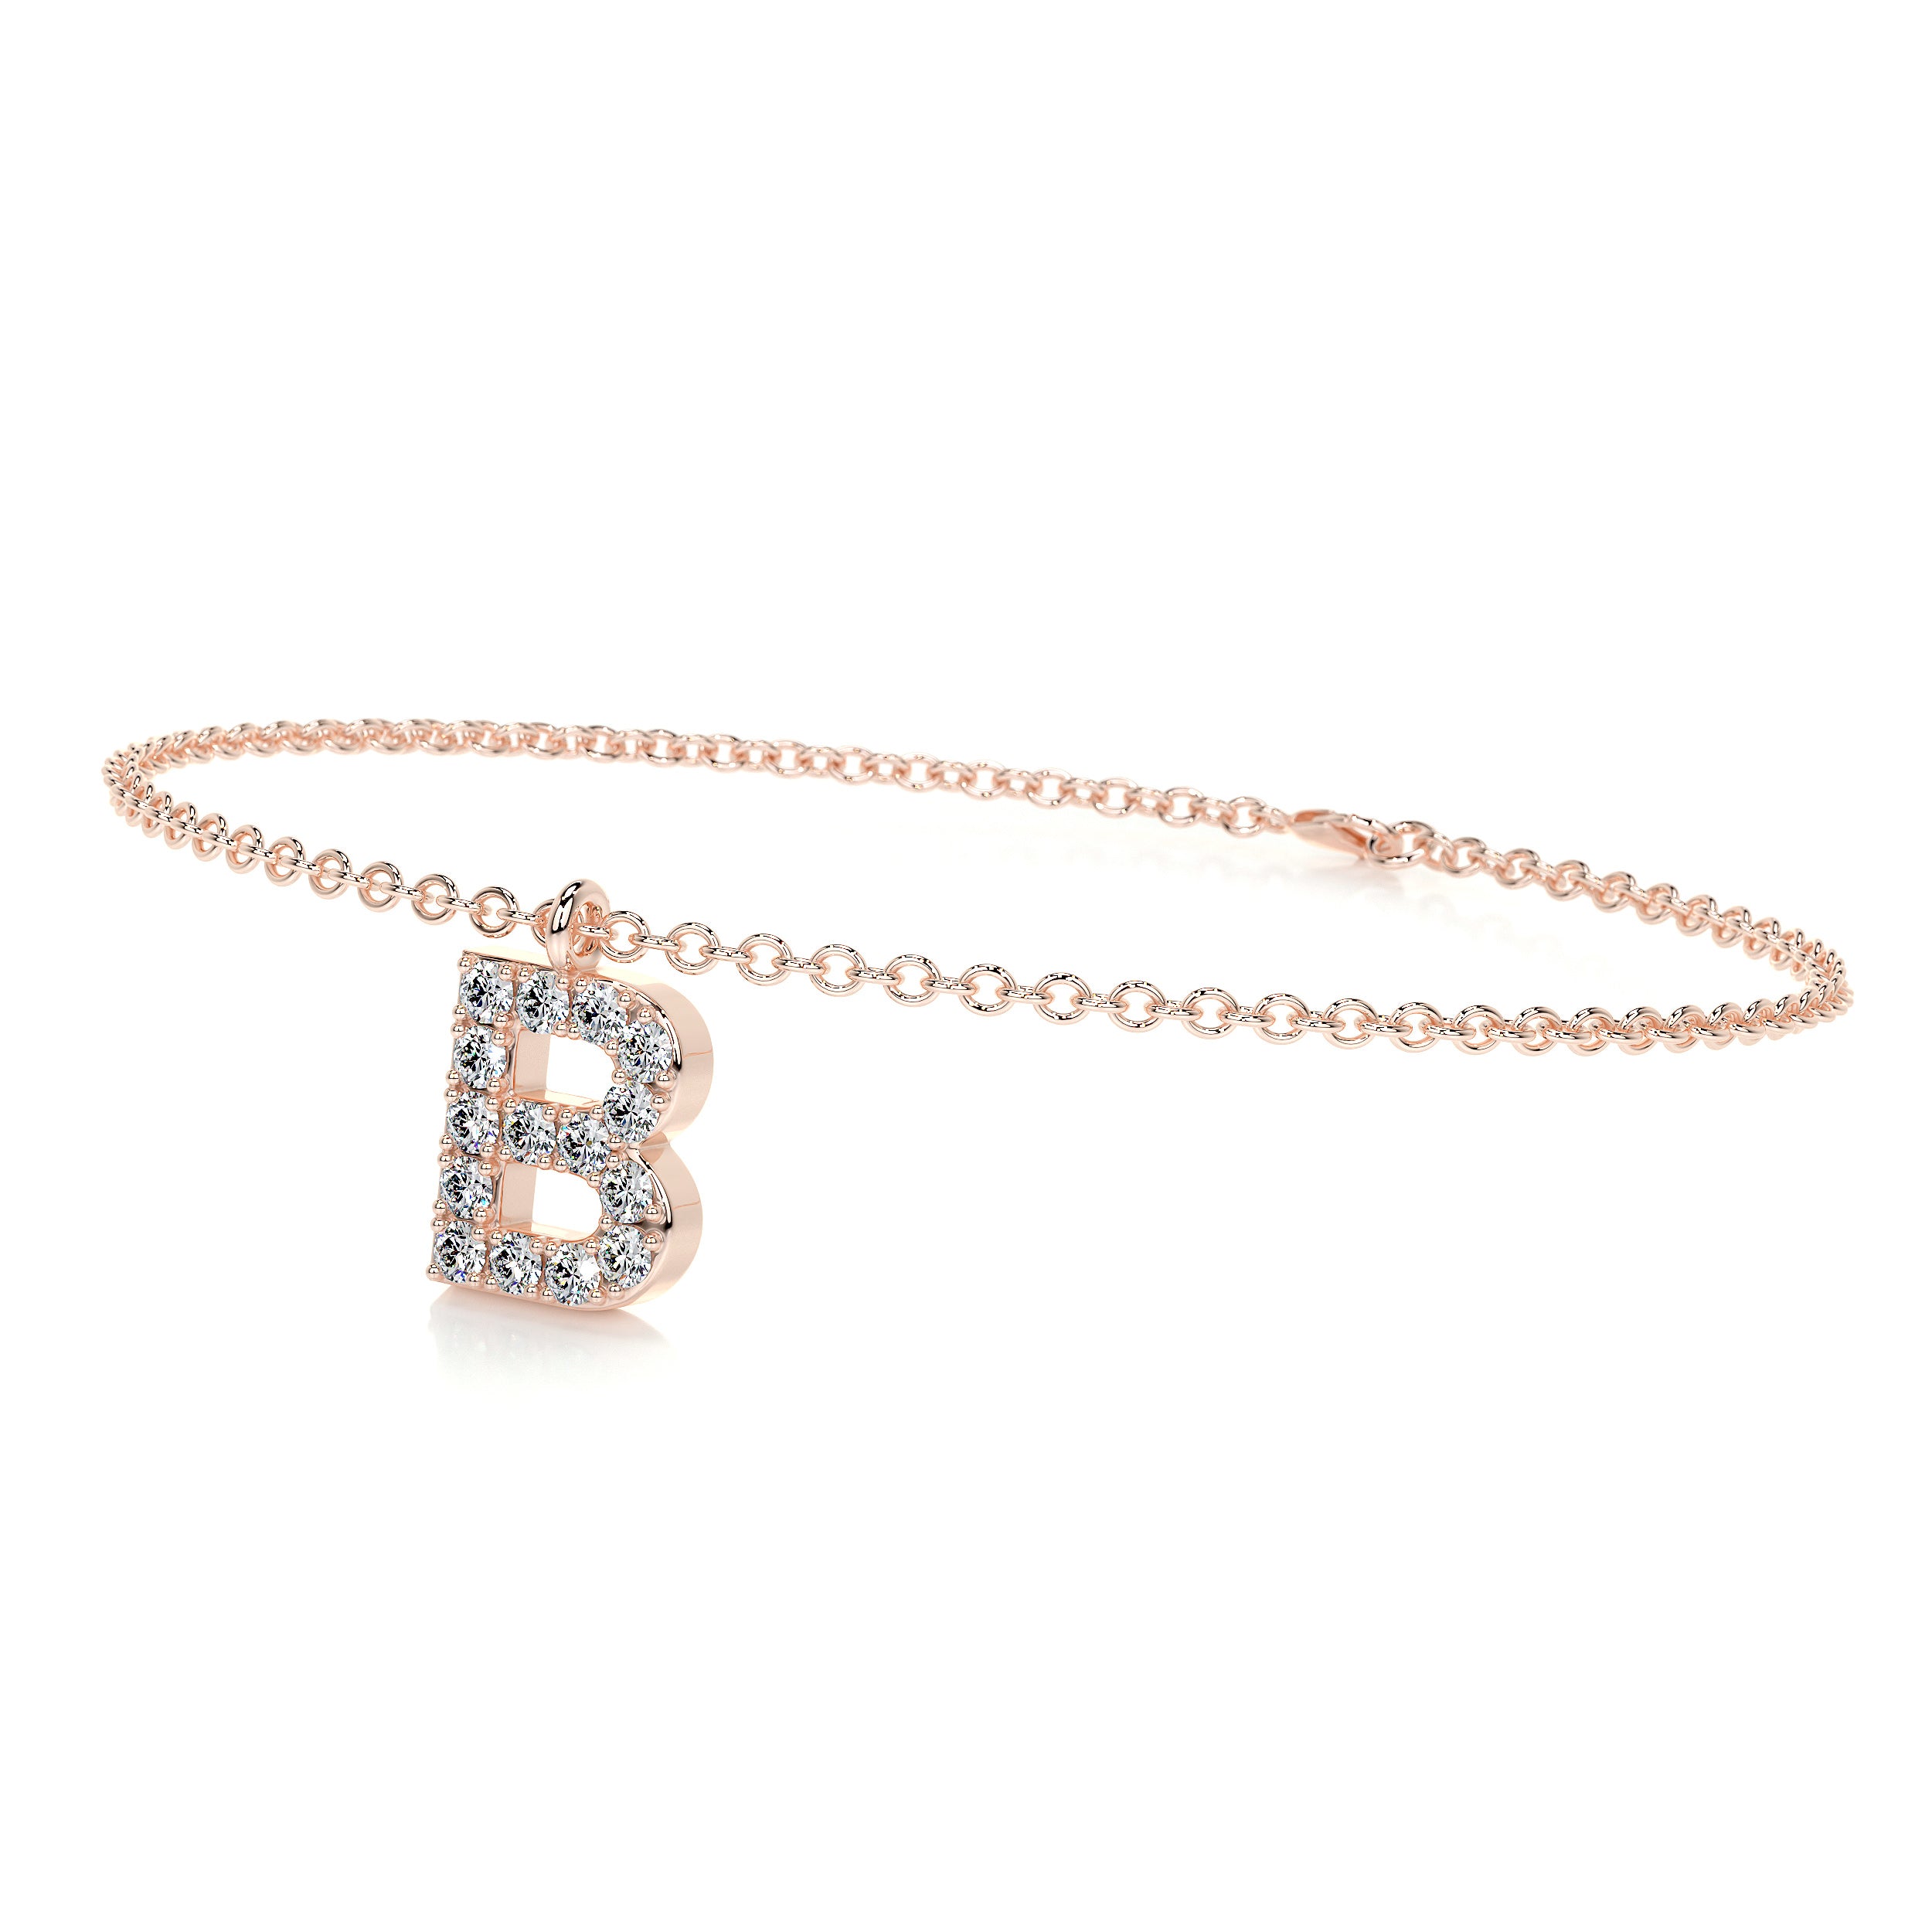 Barbara Letter Diamonds Bracelet   (0.15 Carat) -14K Rose Gold